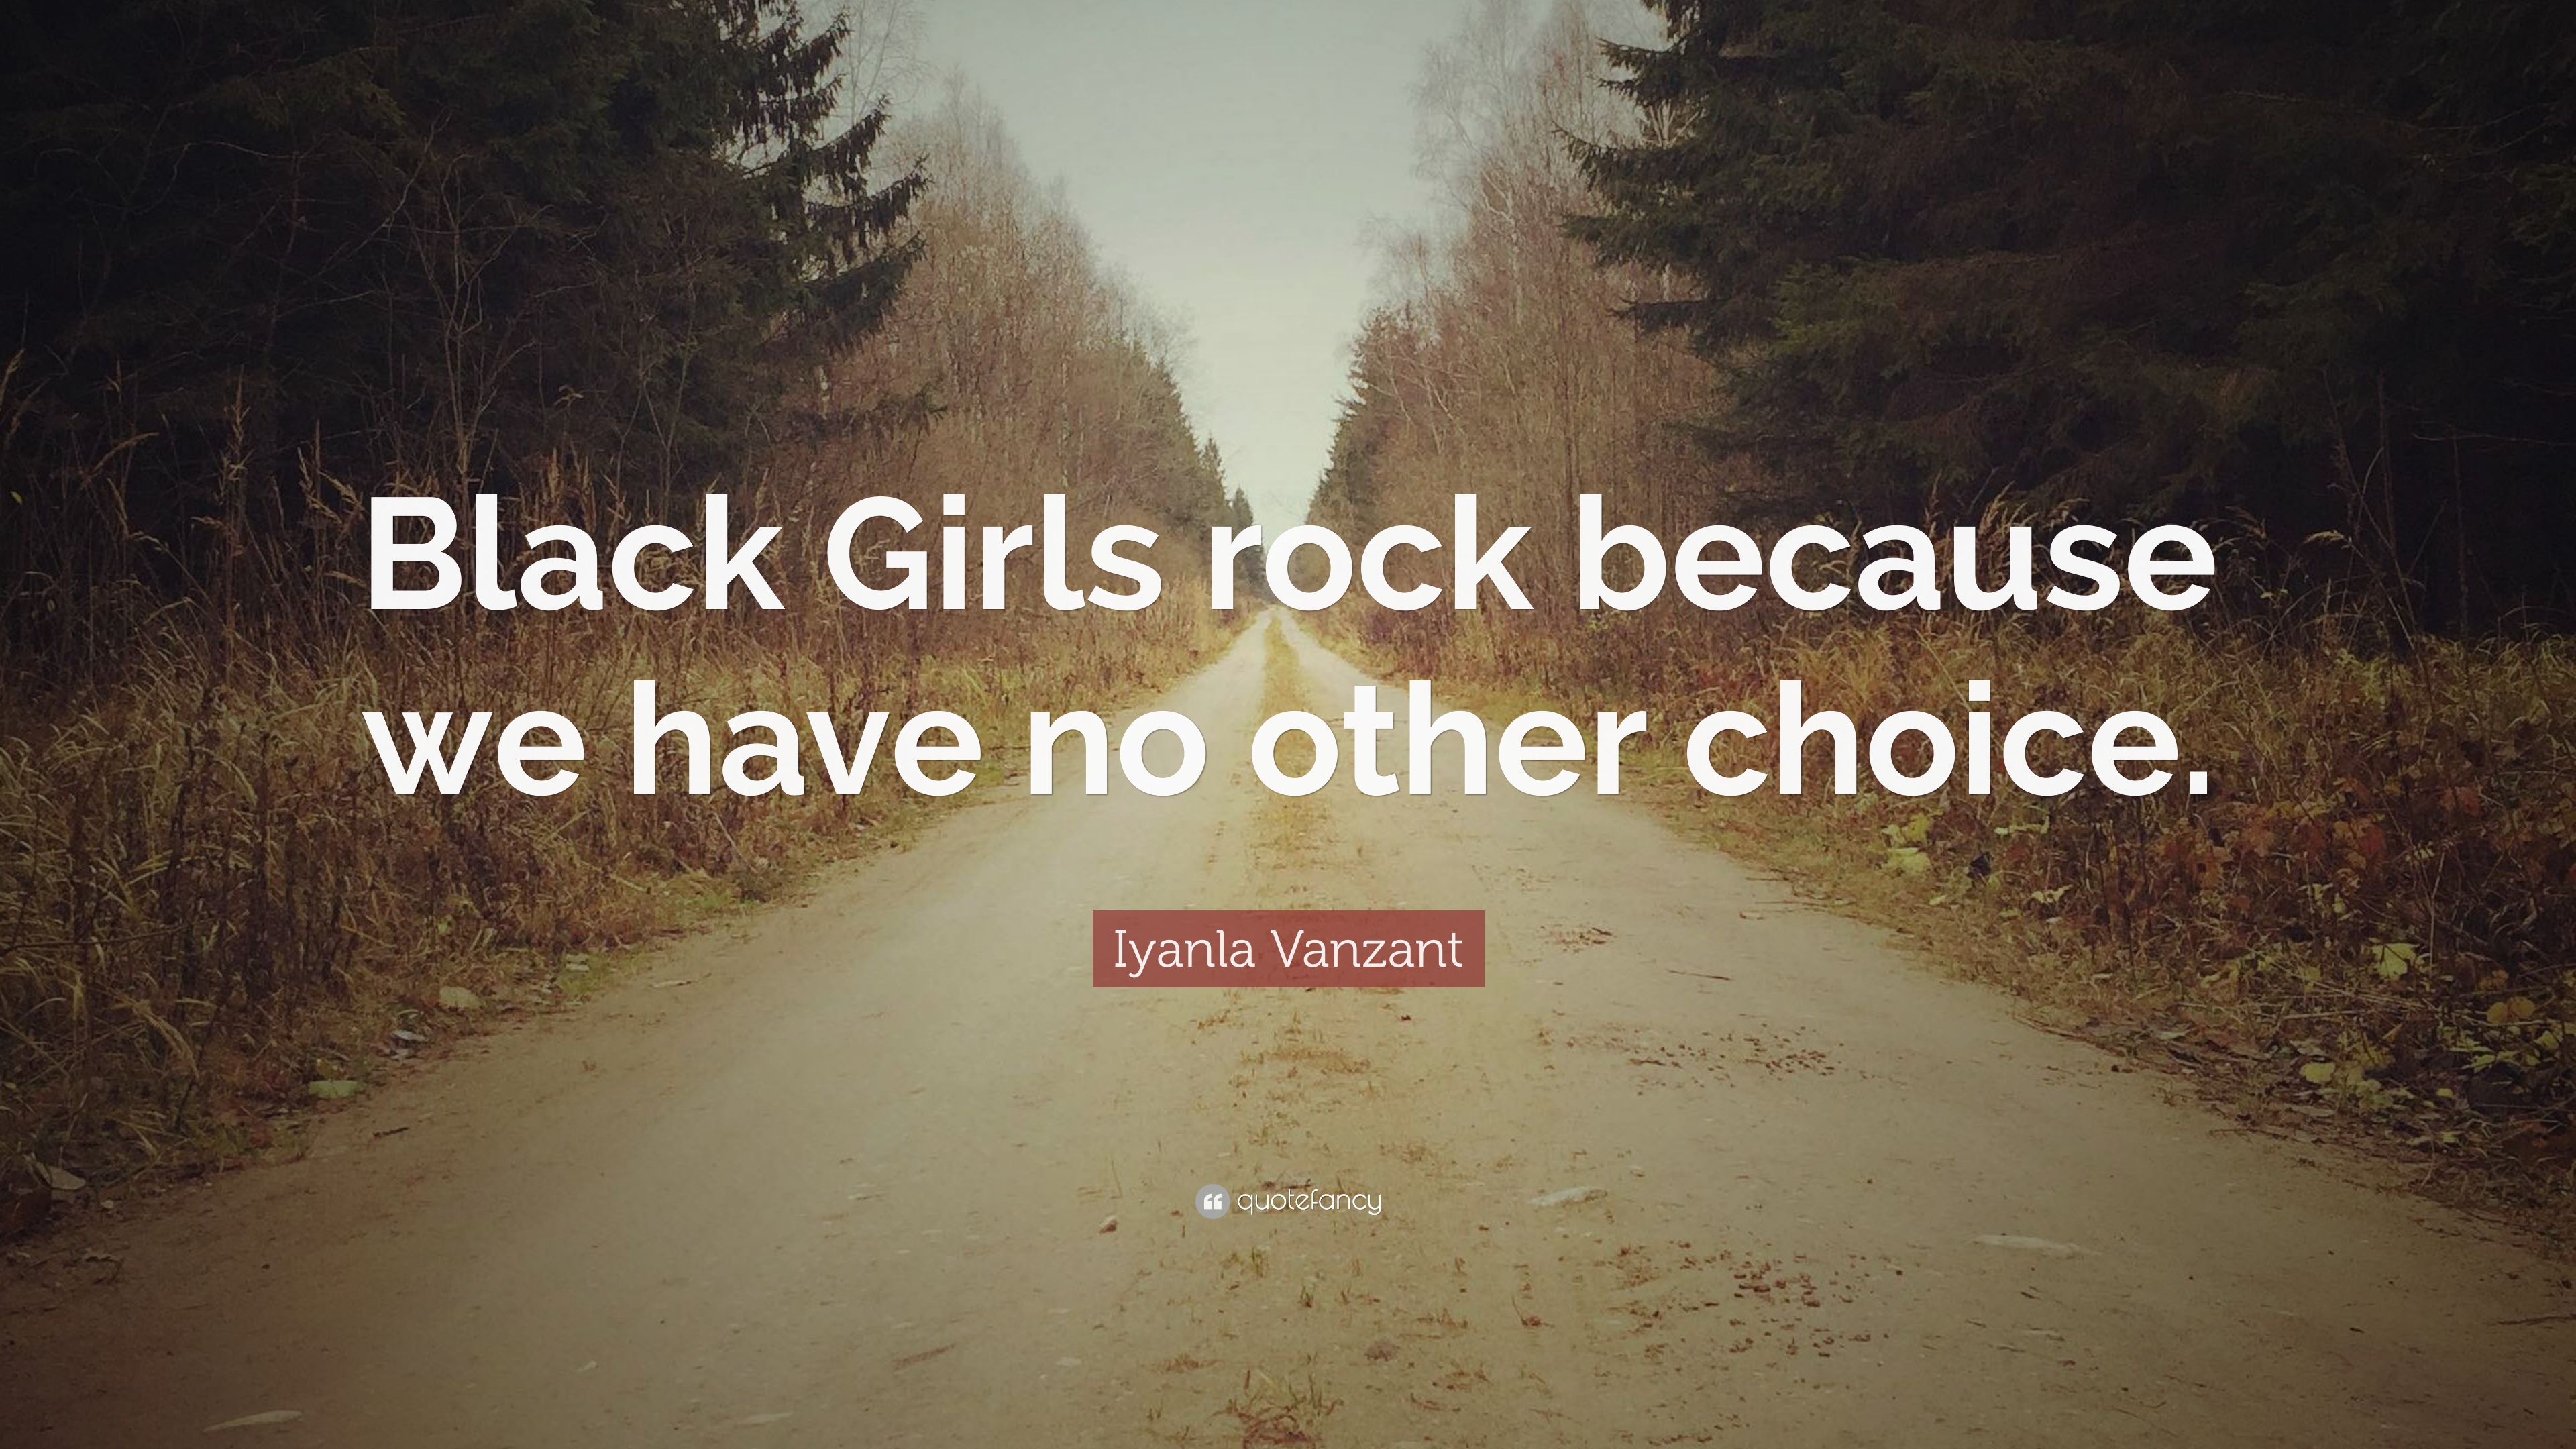 Iyanla Vanzant Quote: “Black Girls rock because we have no